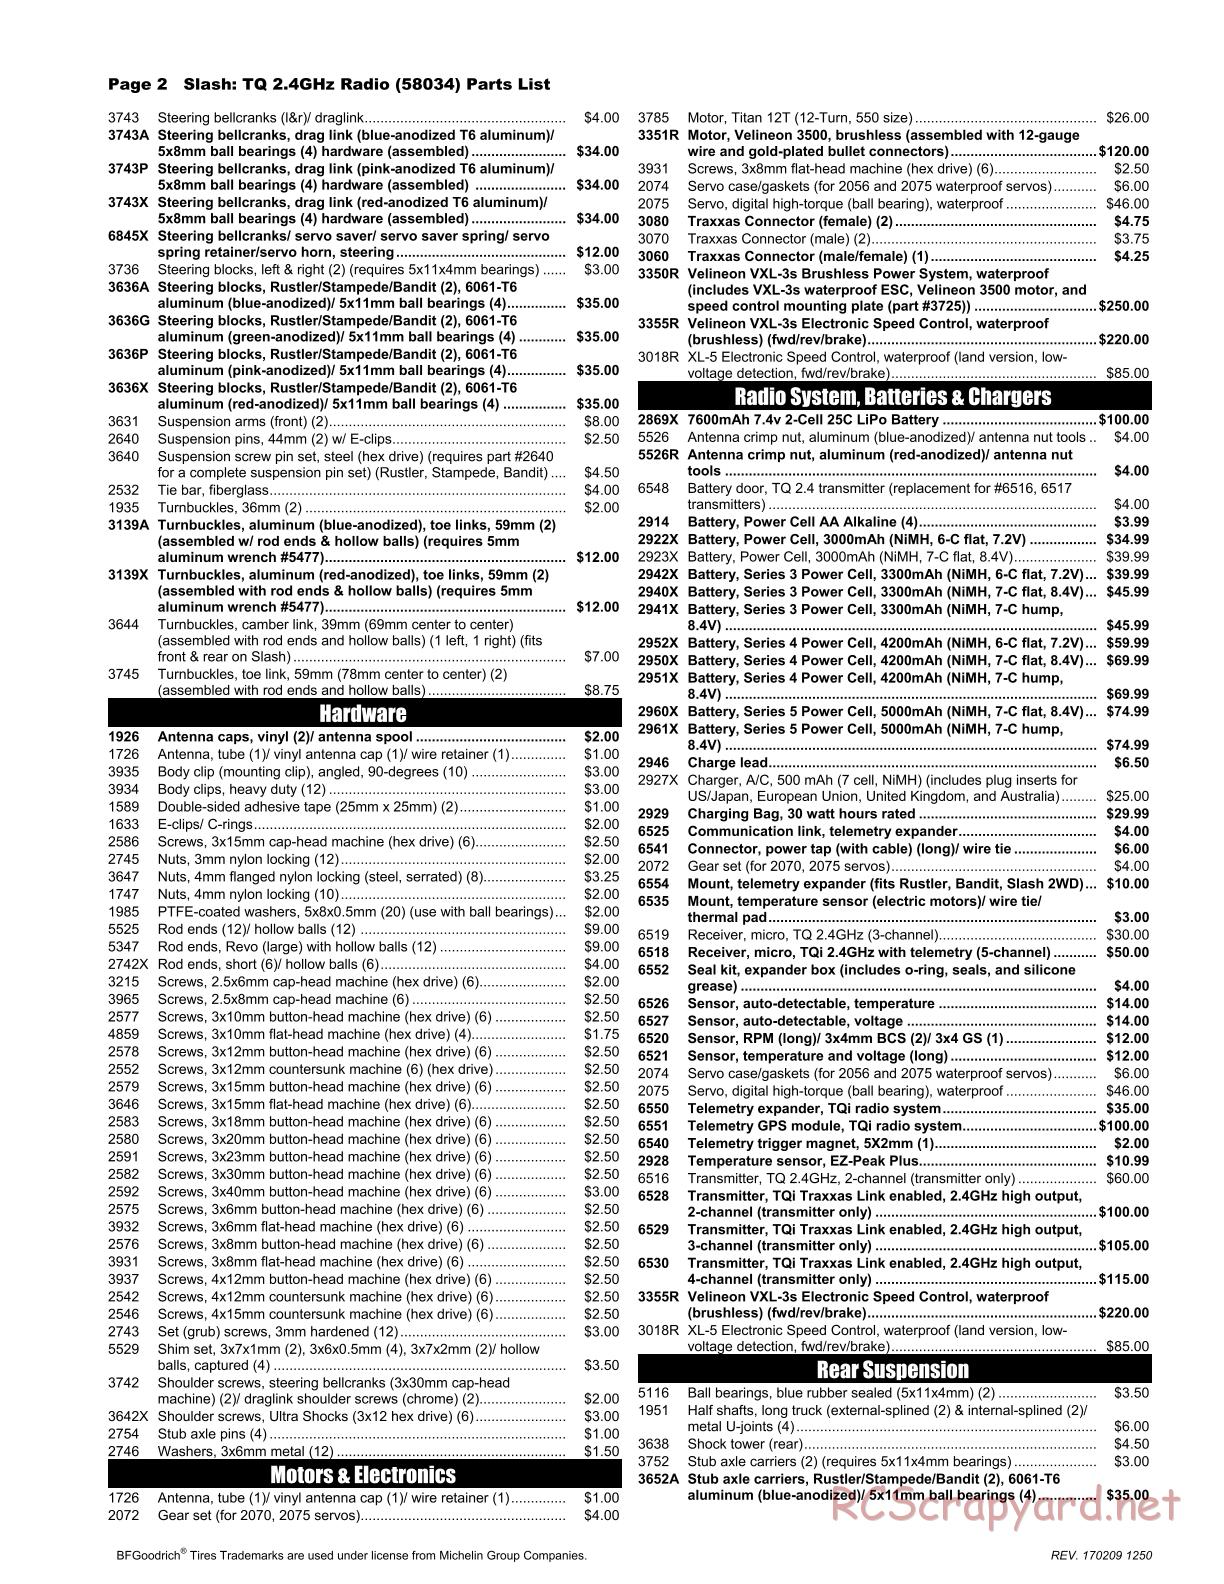 Traxxas - Slash 2WD - Parts List - Page 2